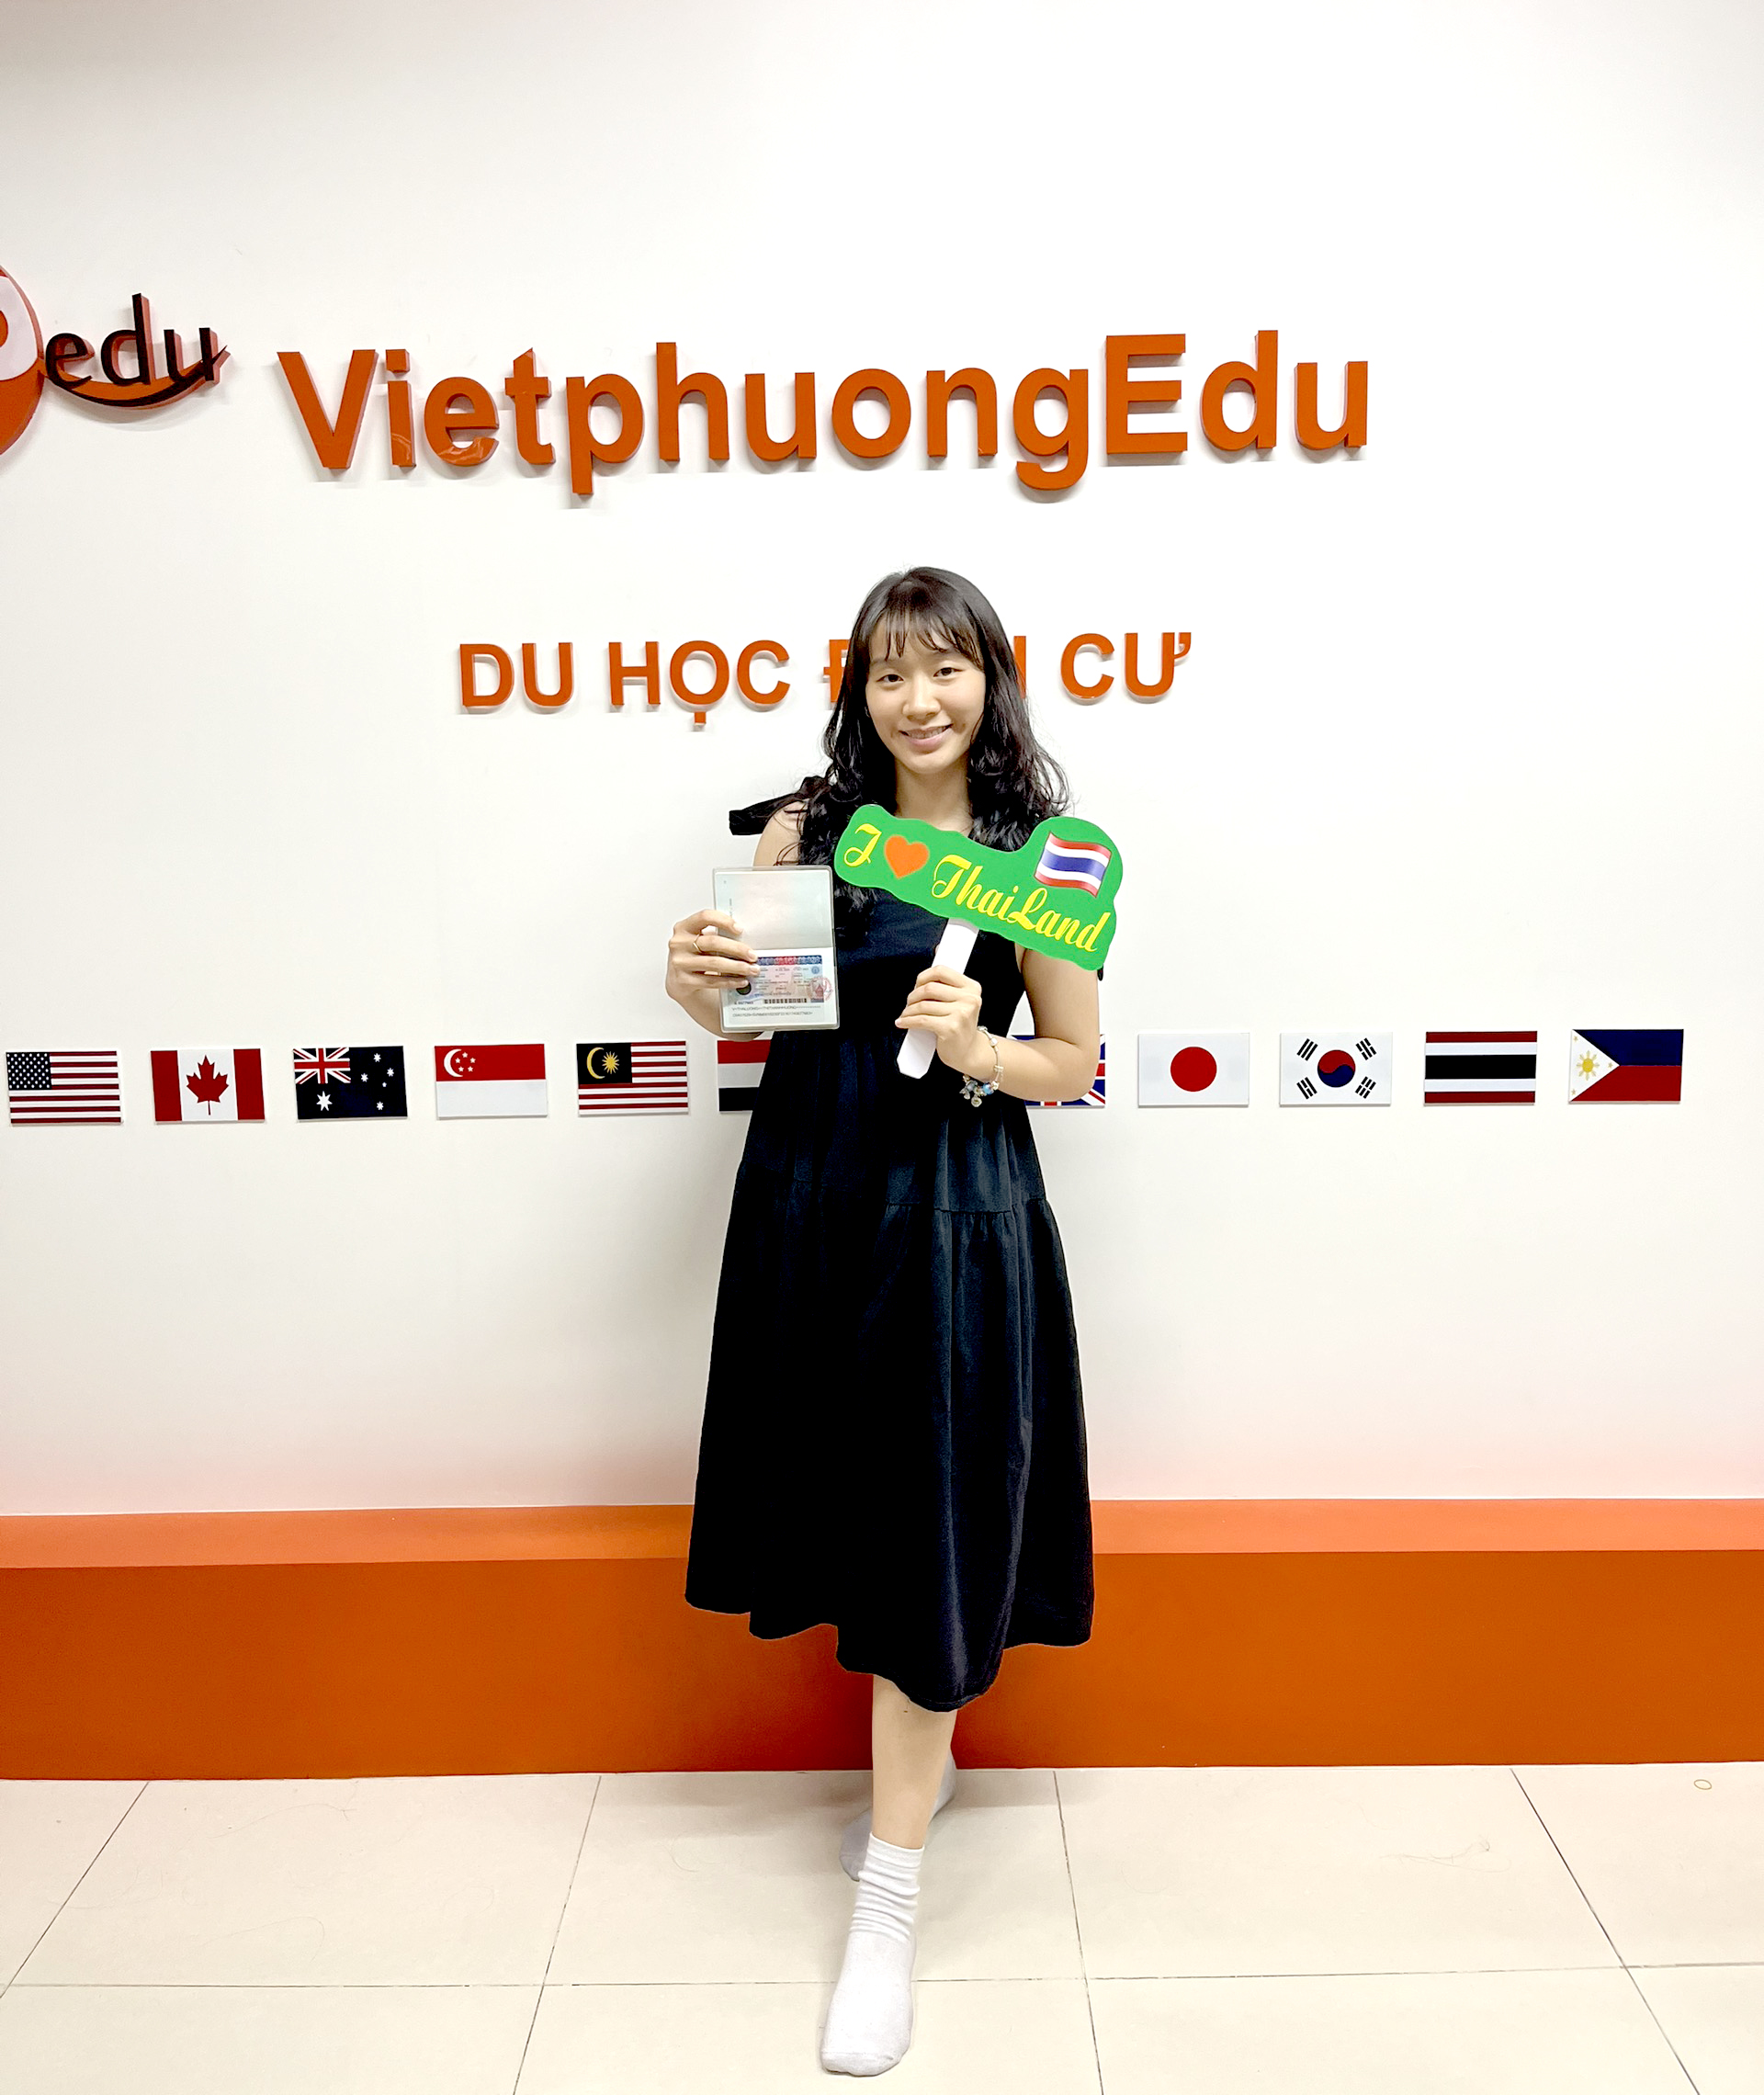 thanh-huong-du-hoc-thai-lan-tai-truong-chulalongkorn-cua-viet-phuong-edu